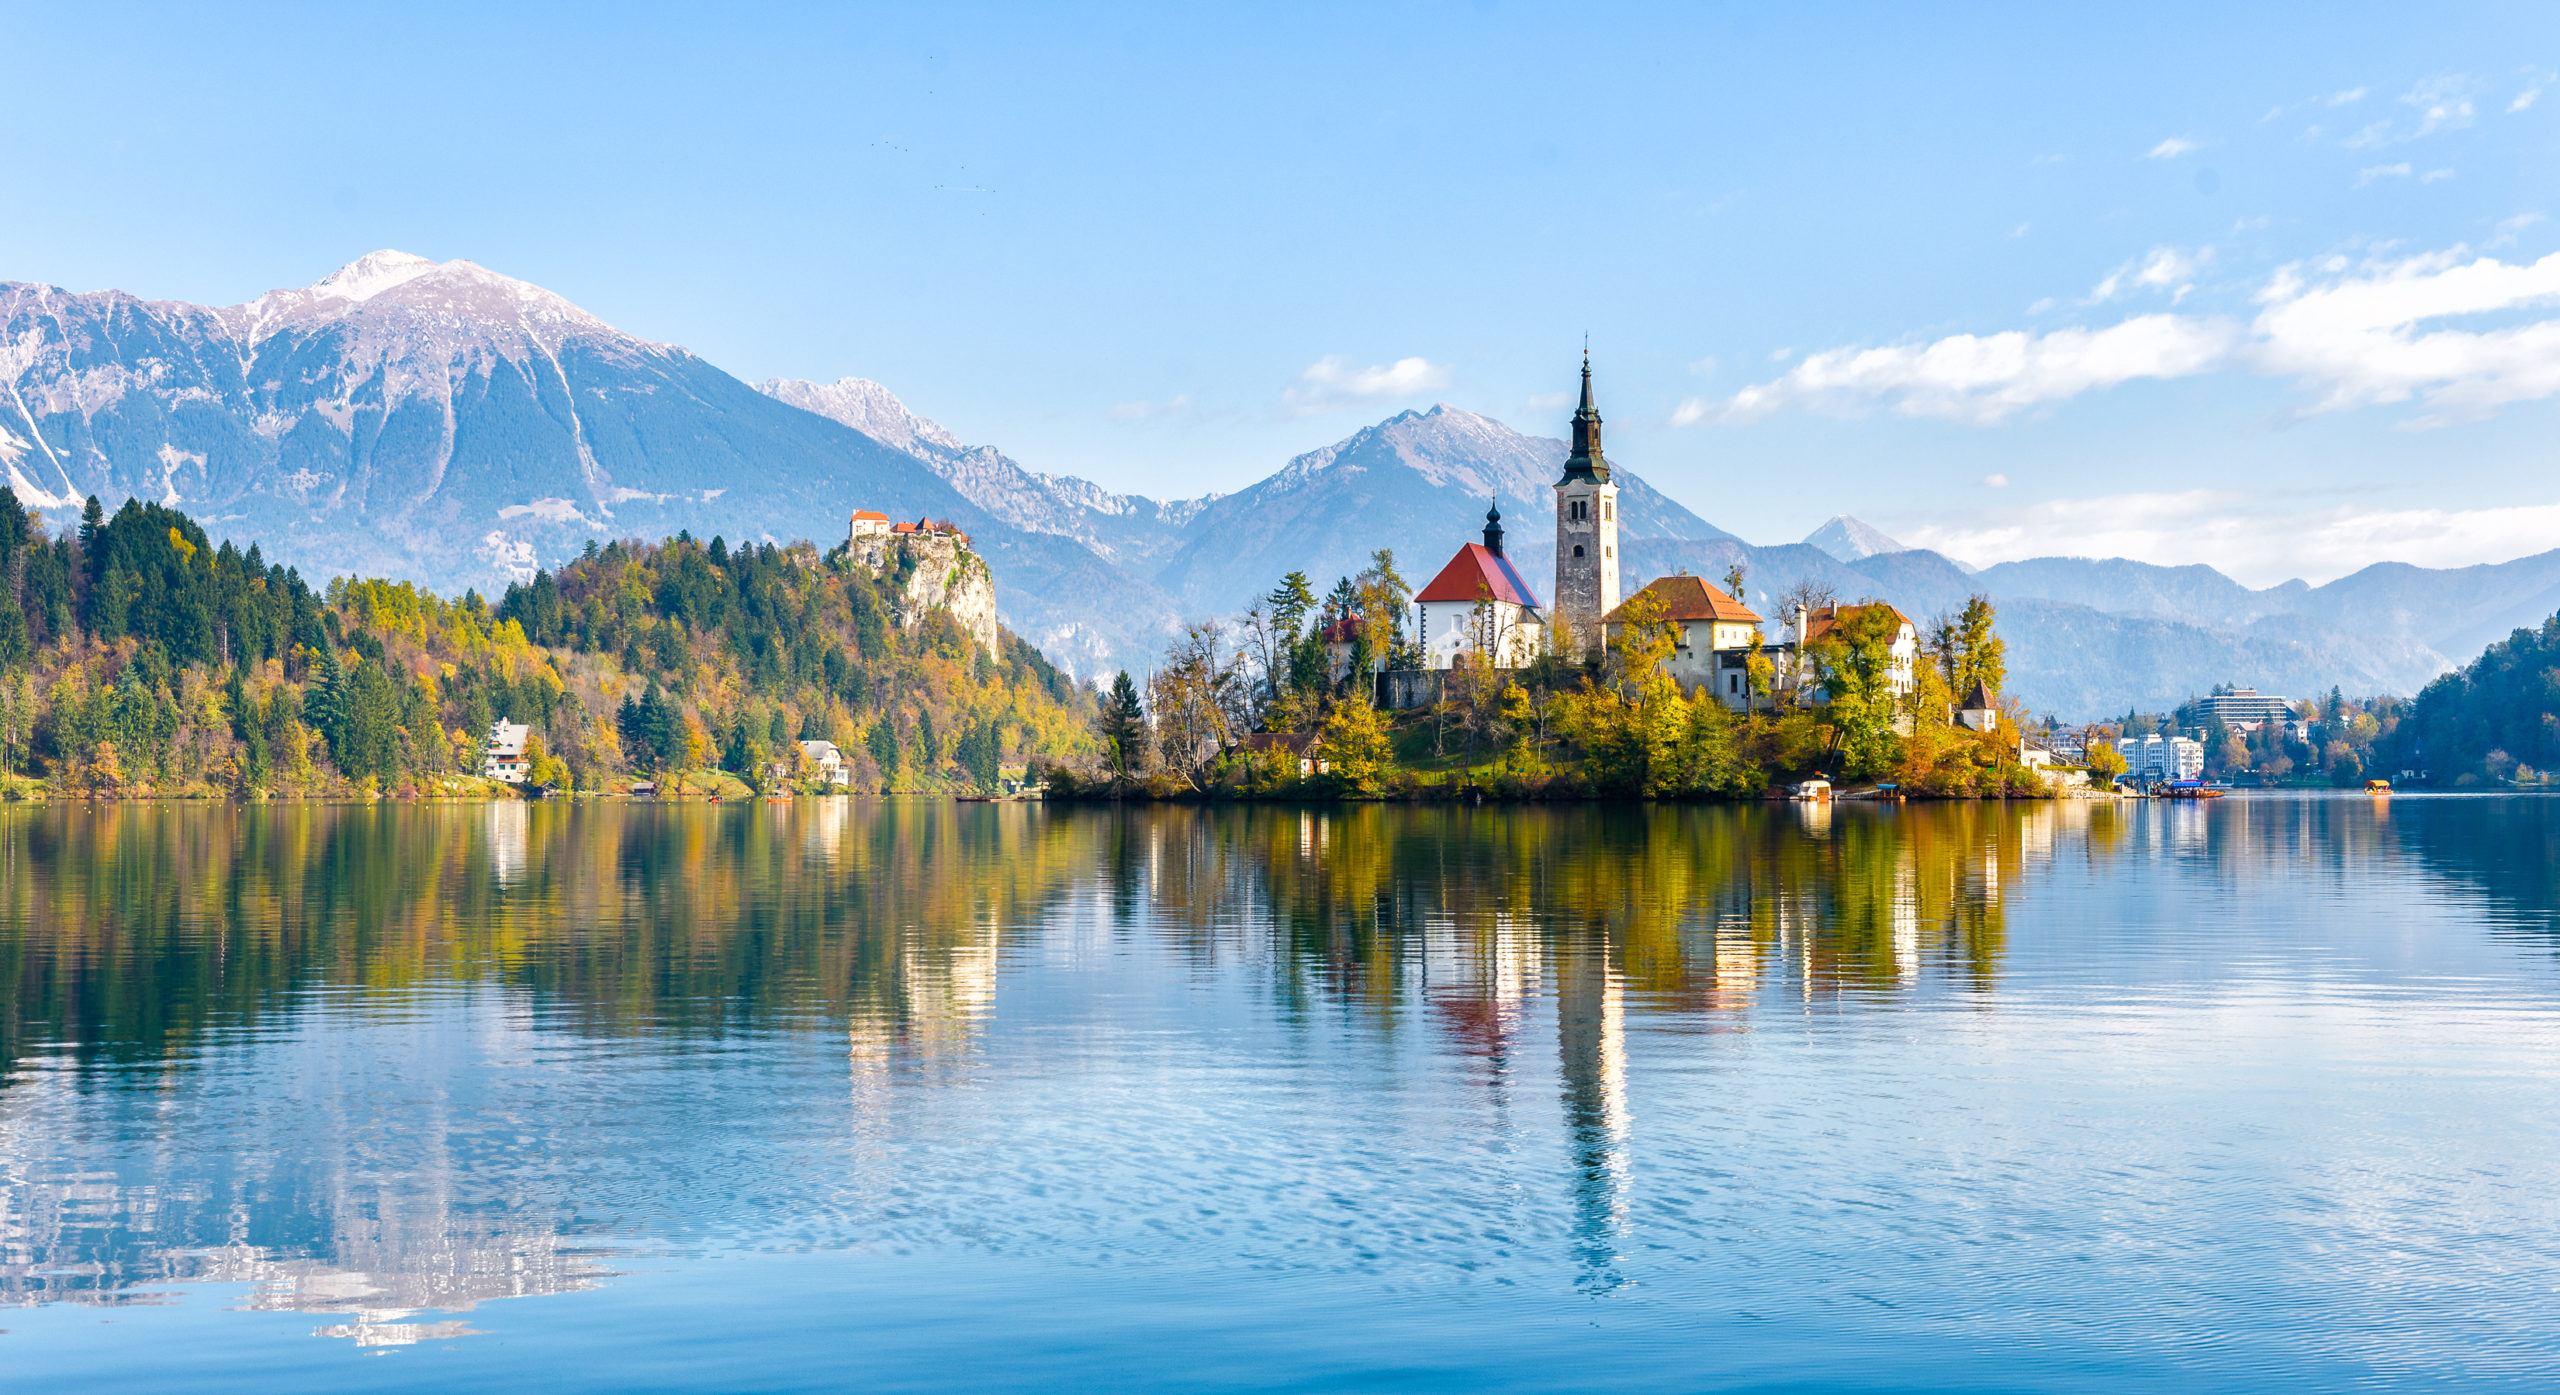 Slovenia [Shutterstock]